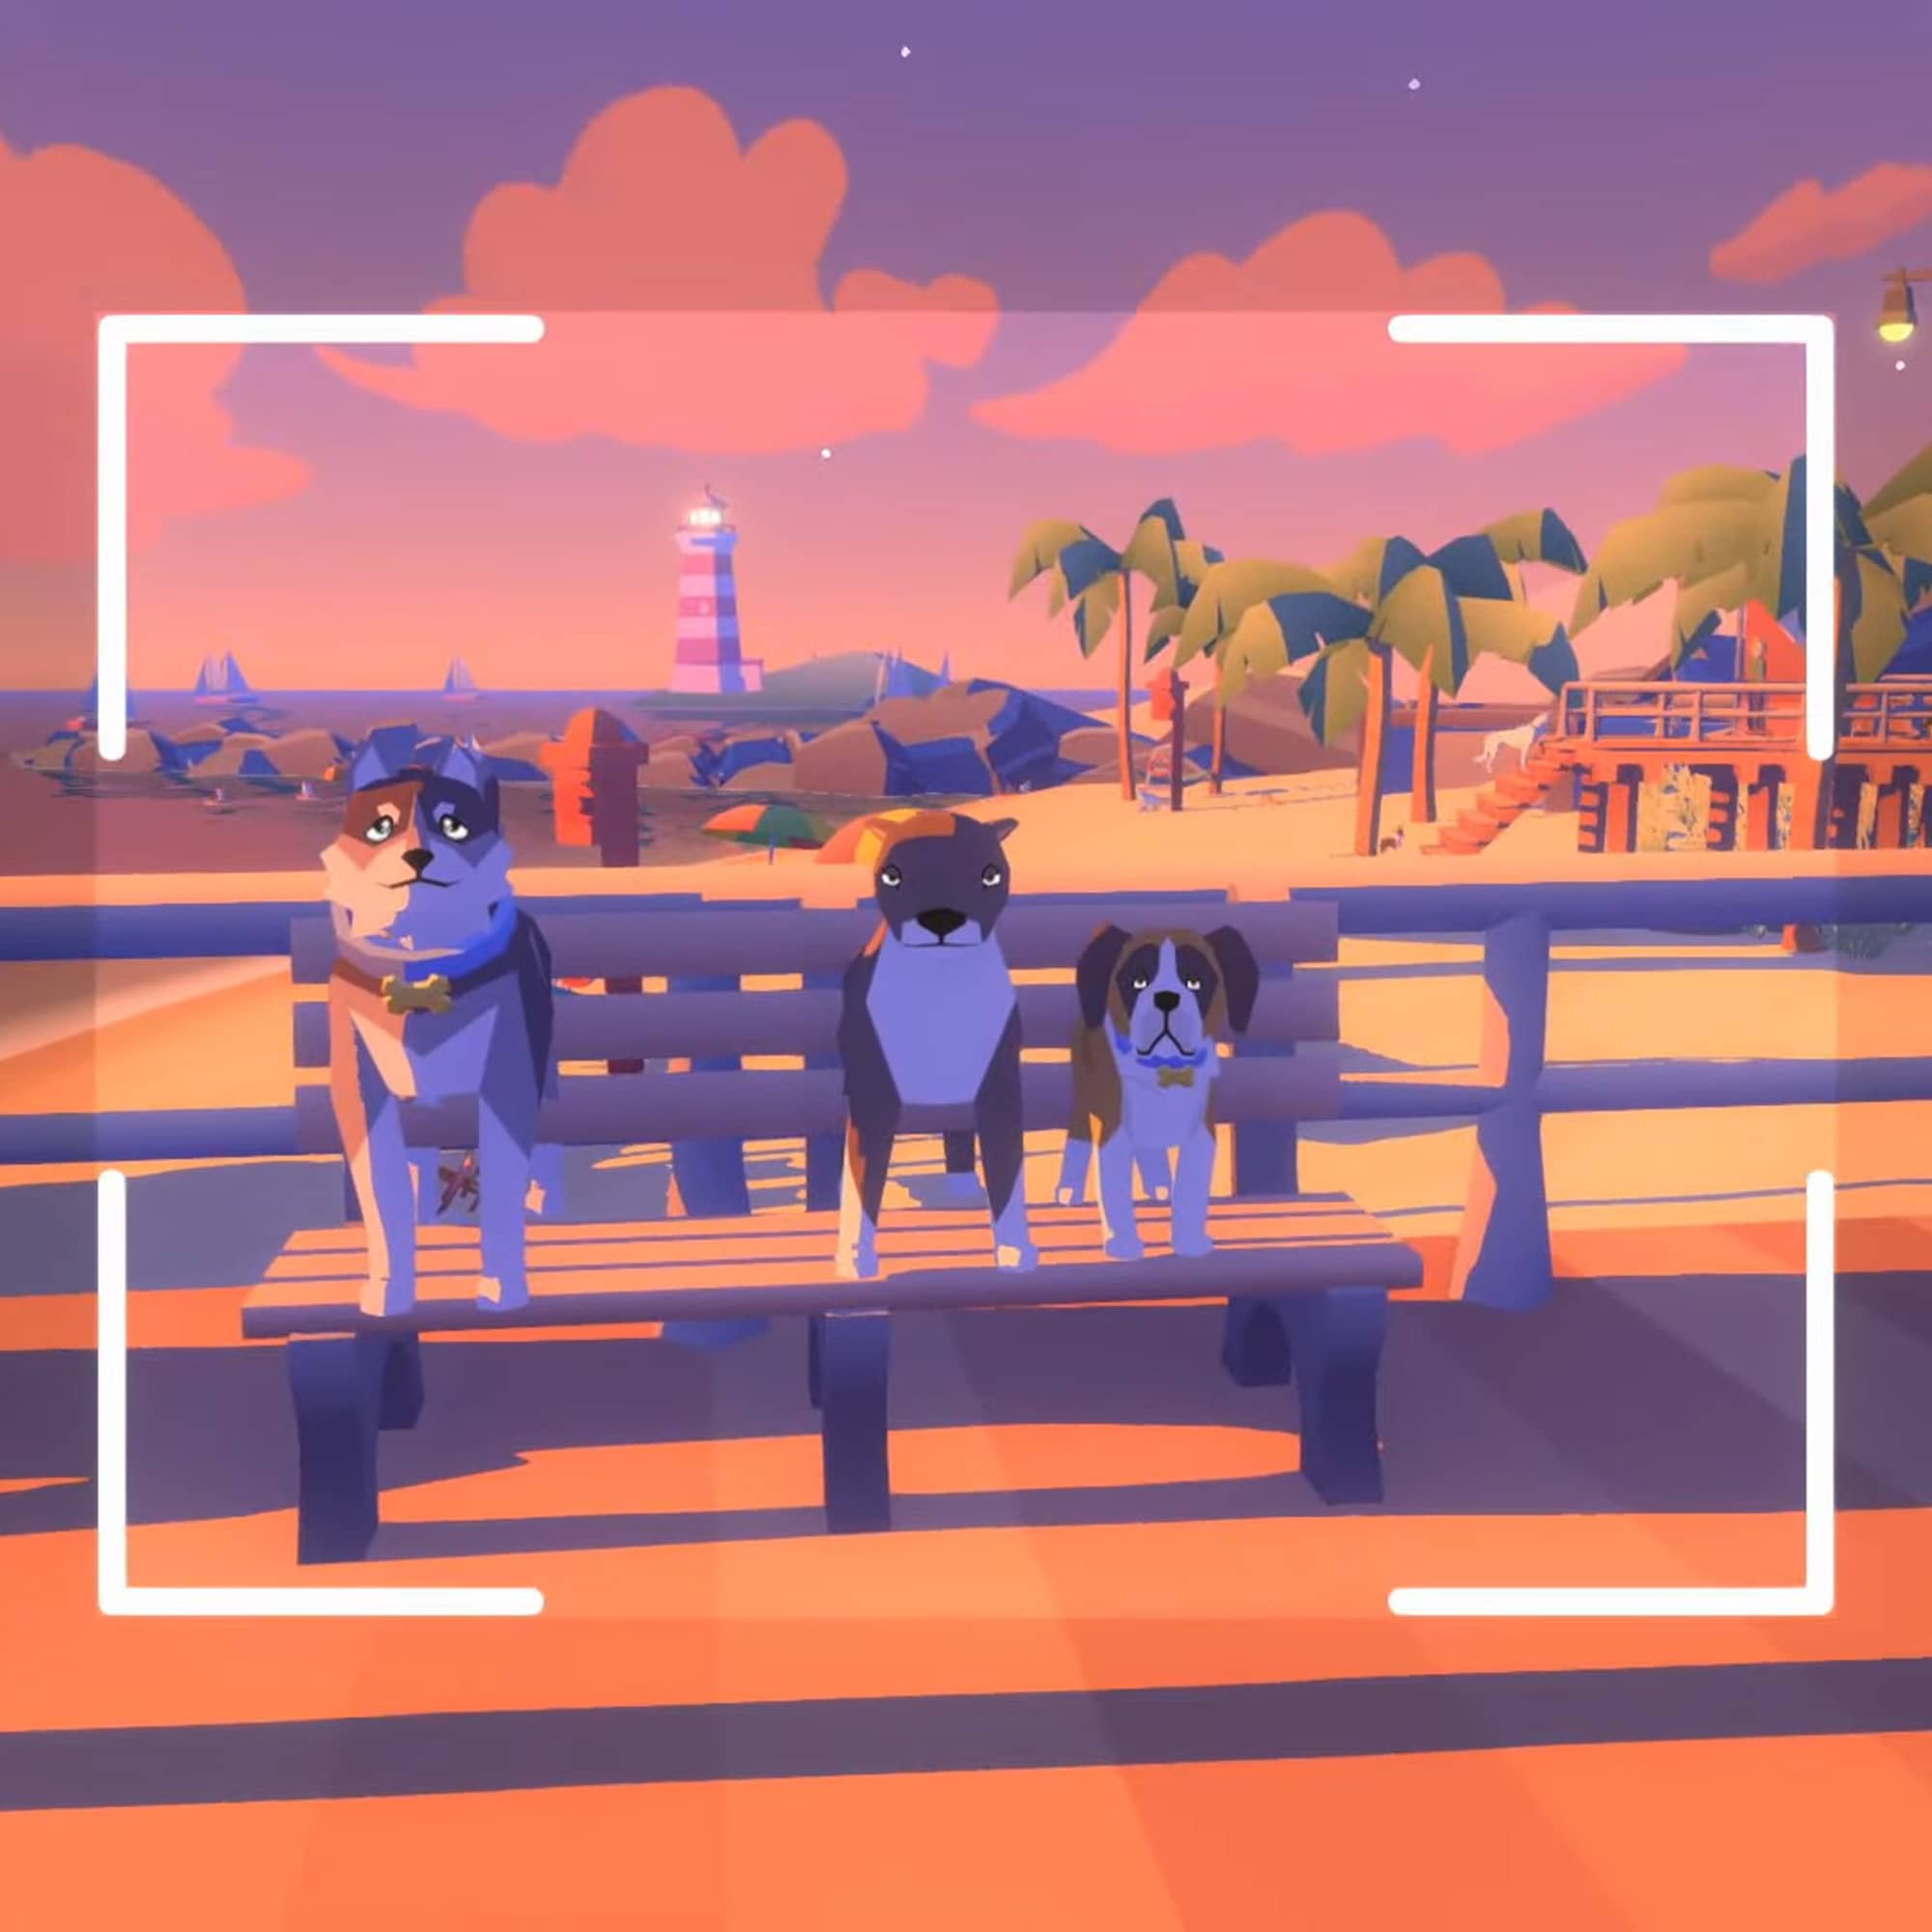 A screenshot from the Pupperazzi game trailer.